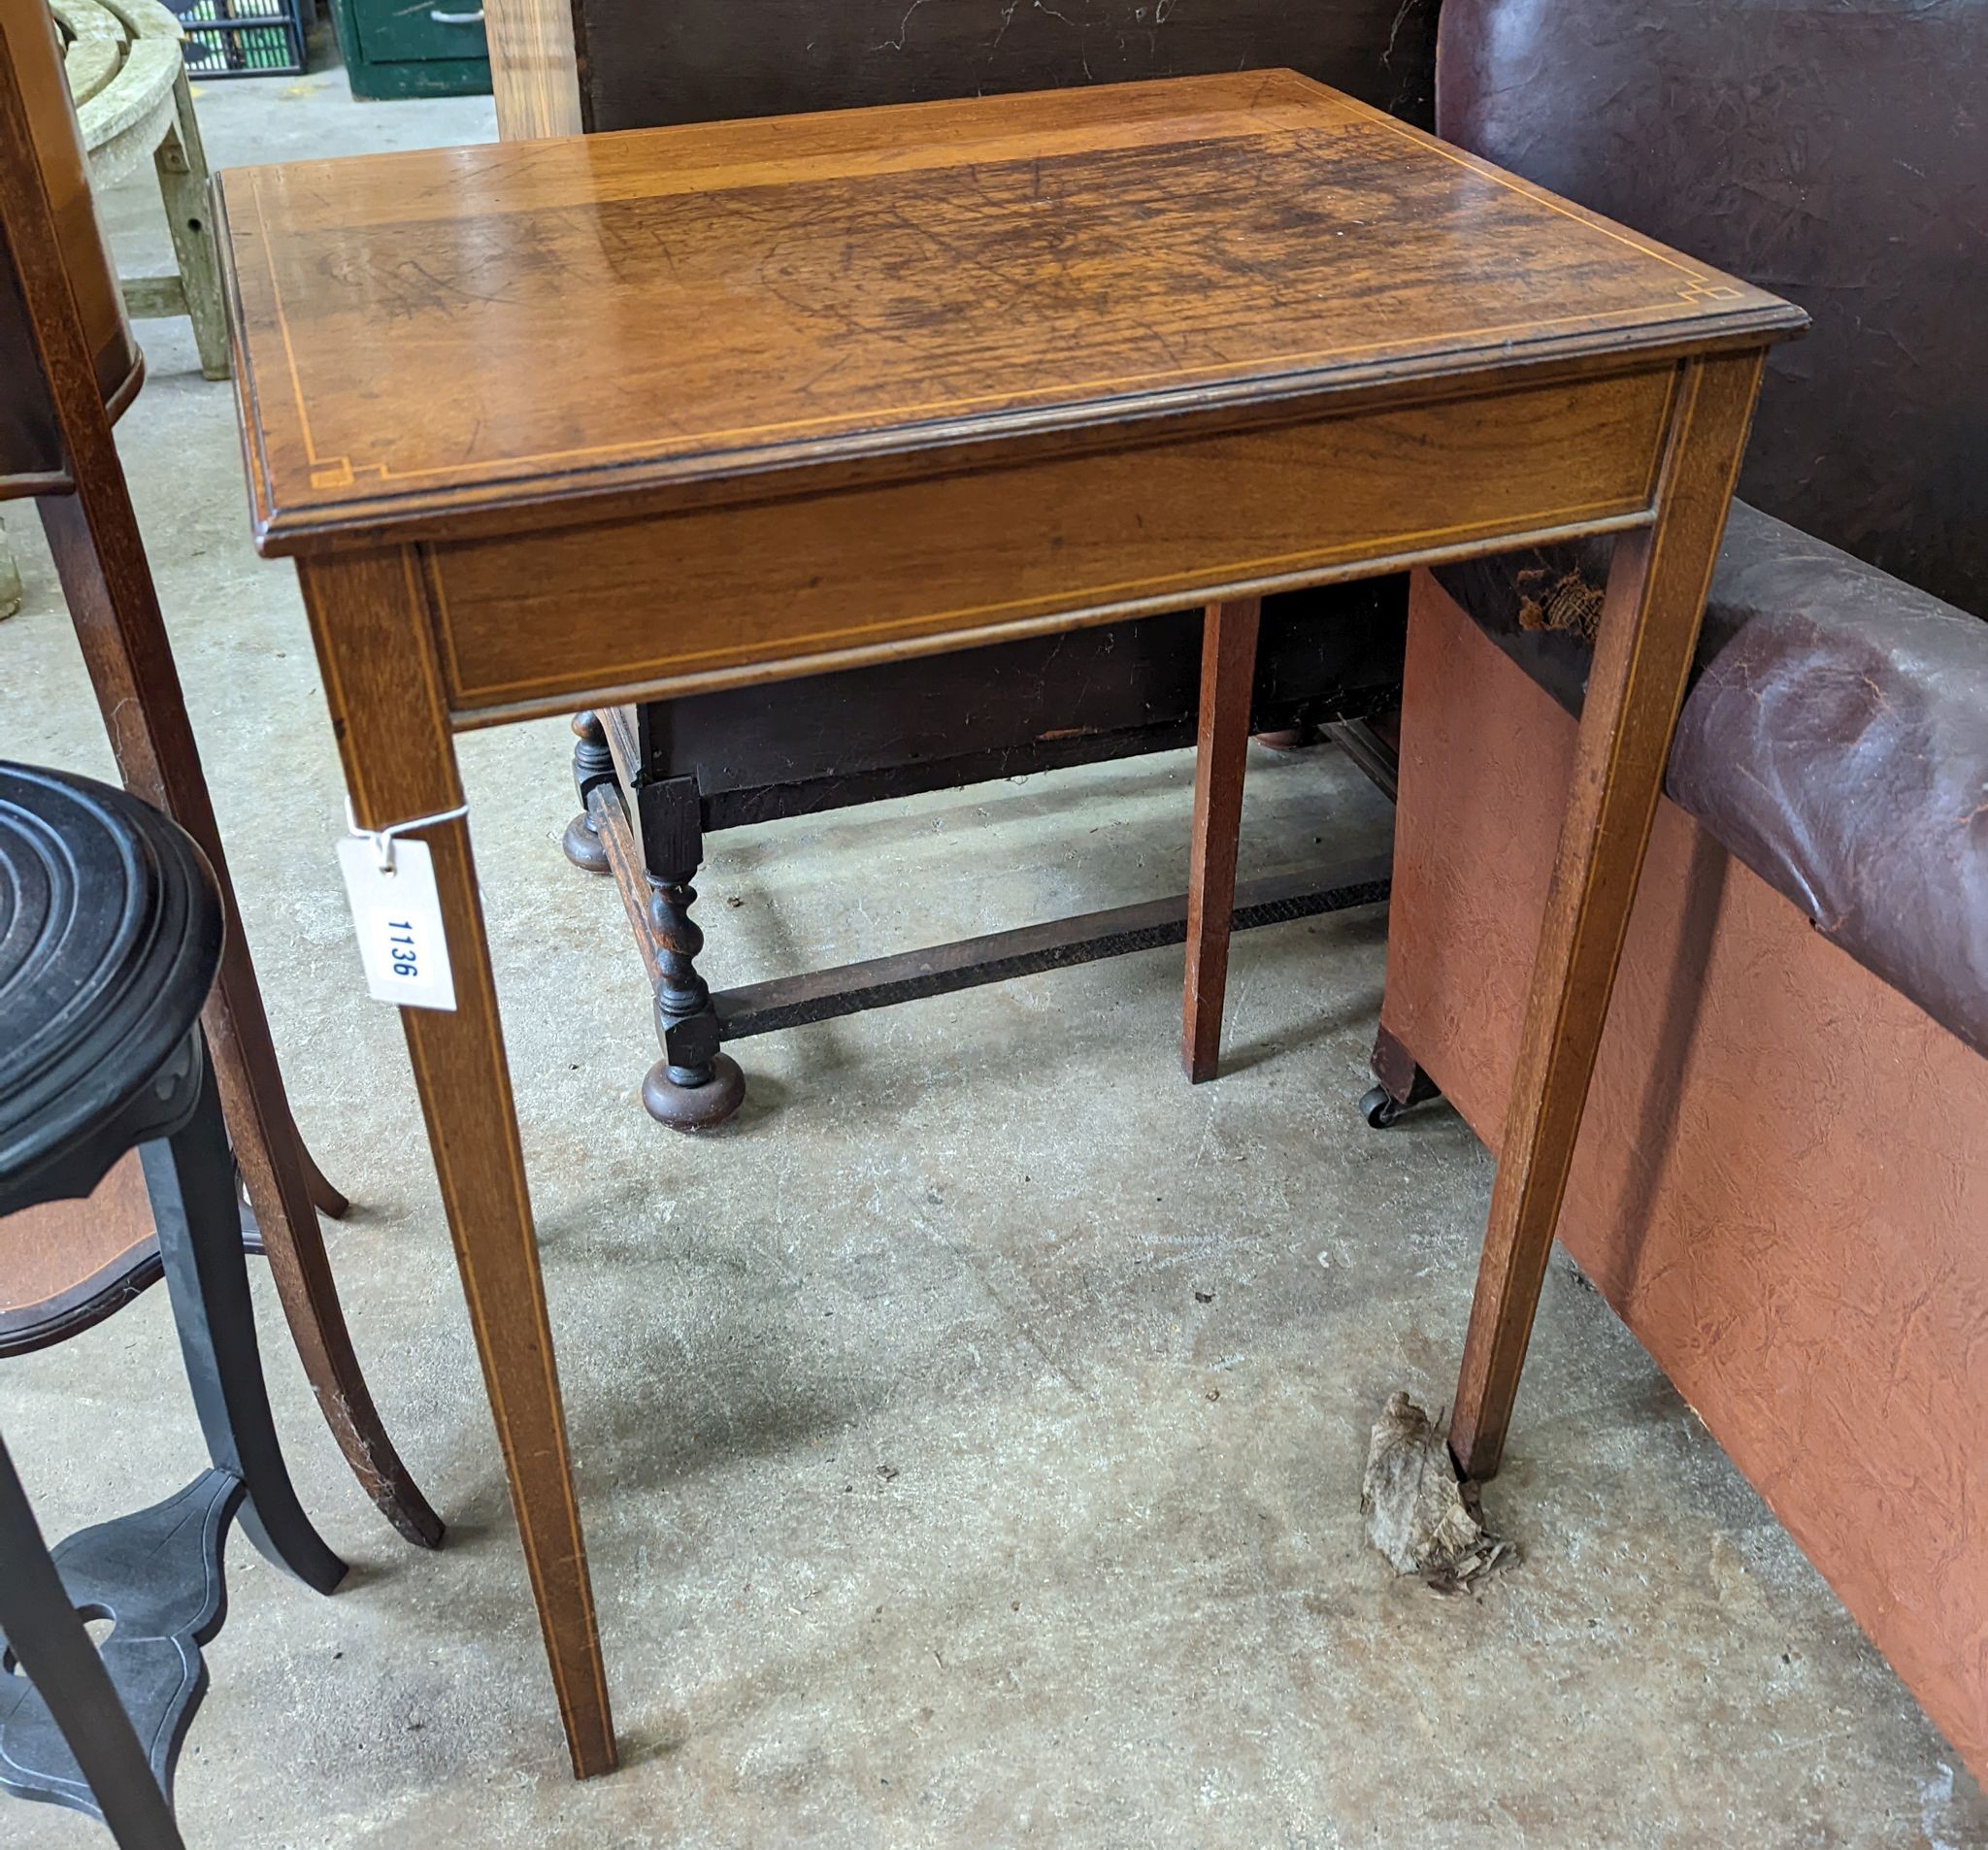 An Edwardian inlaid mahogany hinge top table, width 60cm, depth 45cm, height 77cm